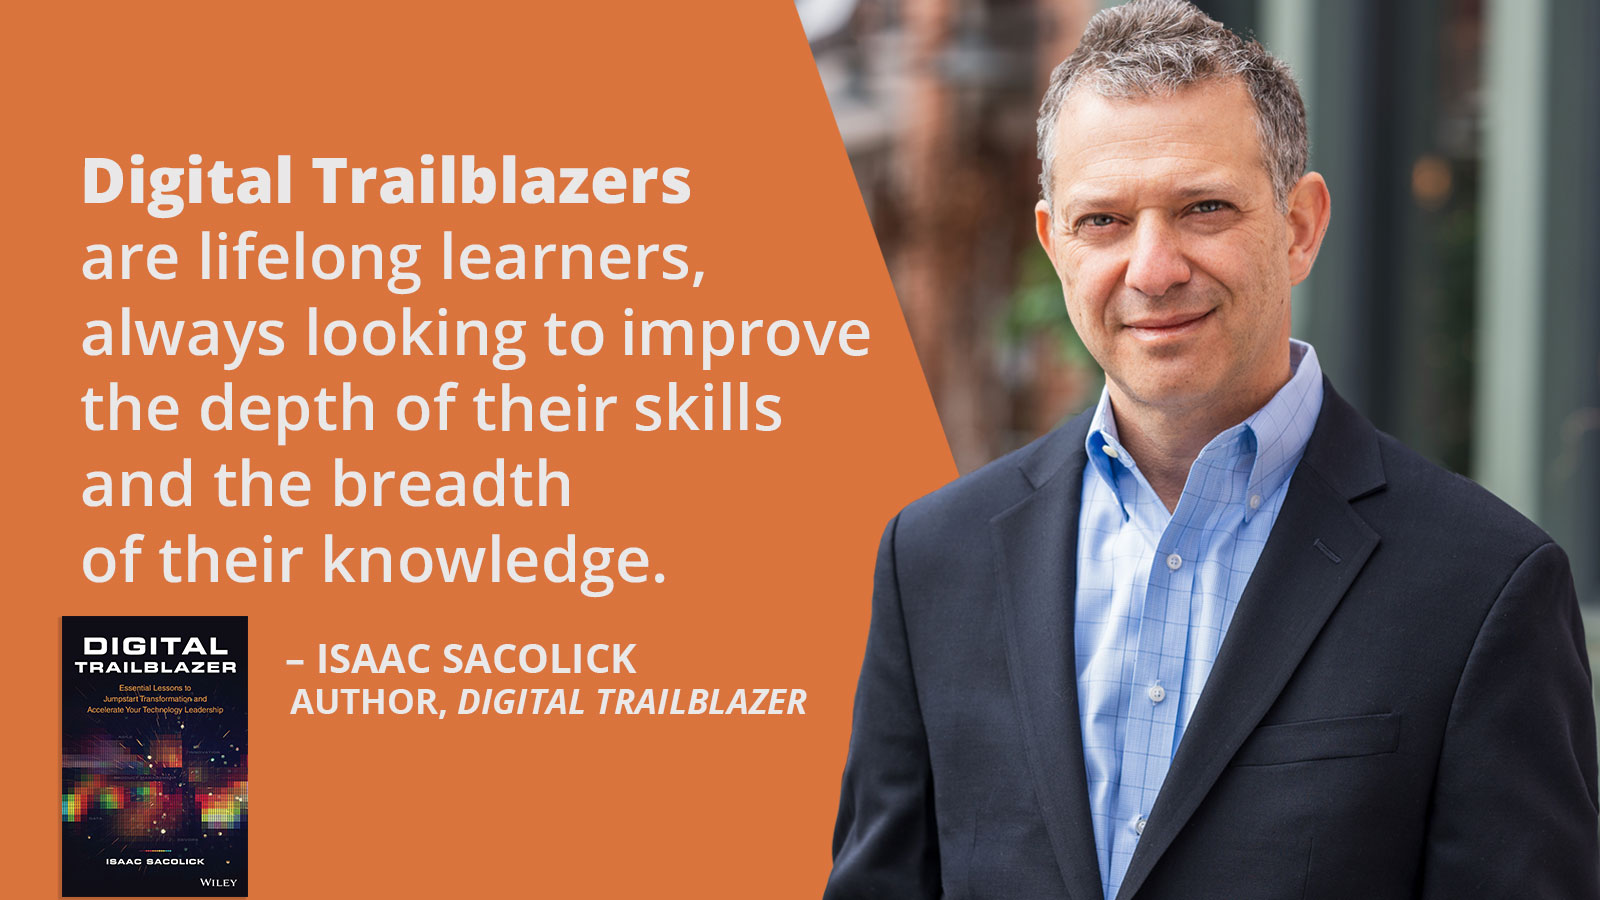 Digital Trailblazers are lifelong learners